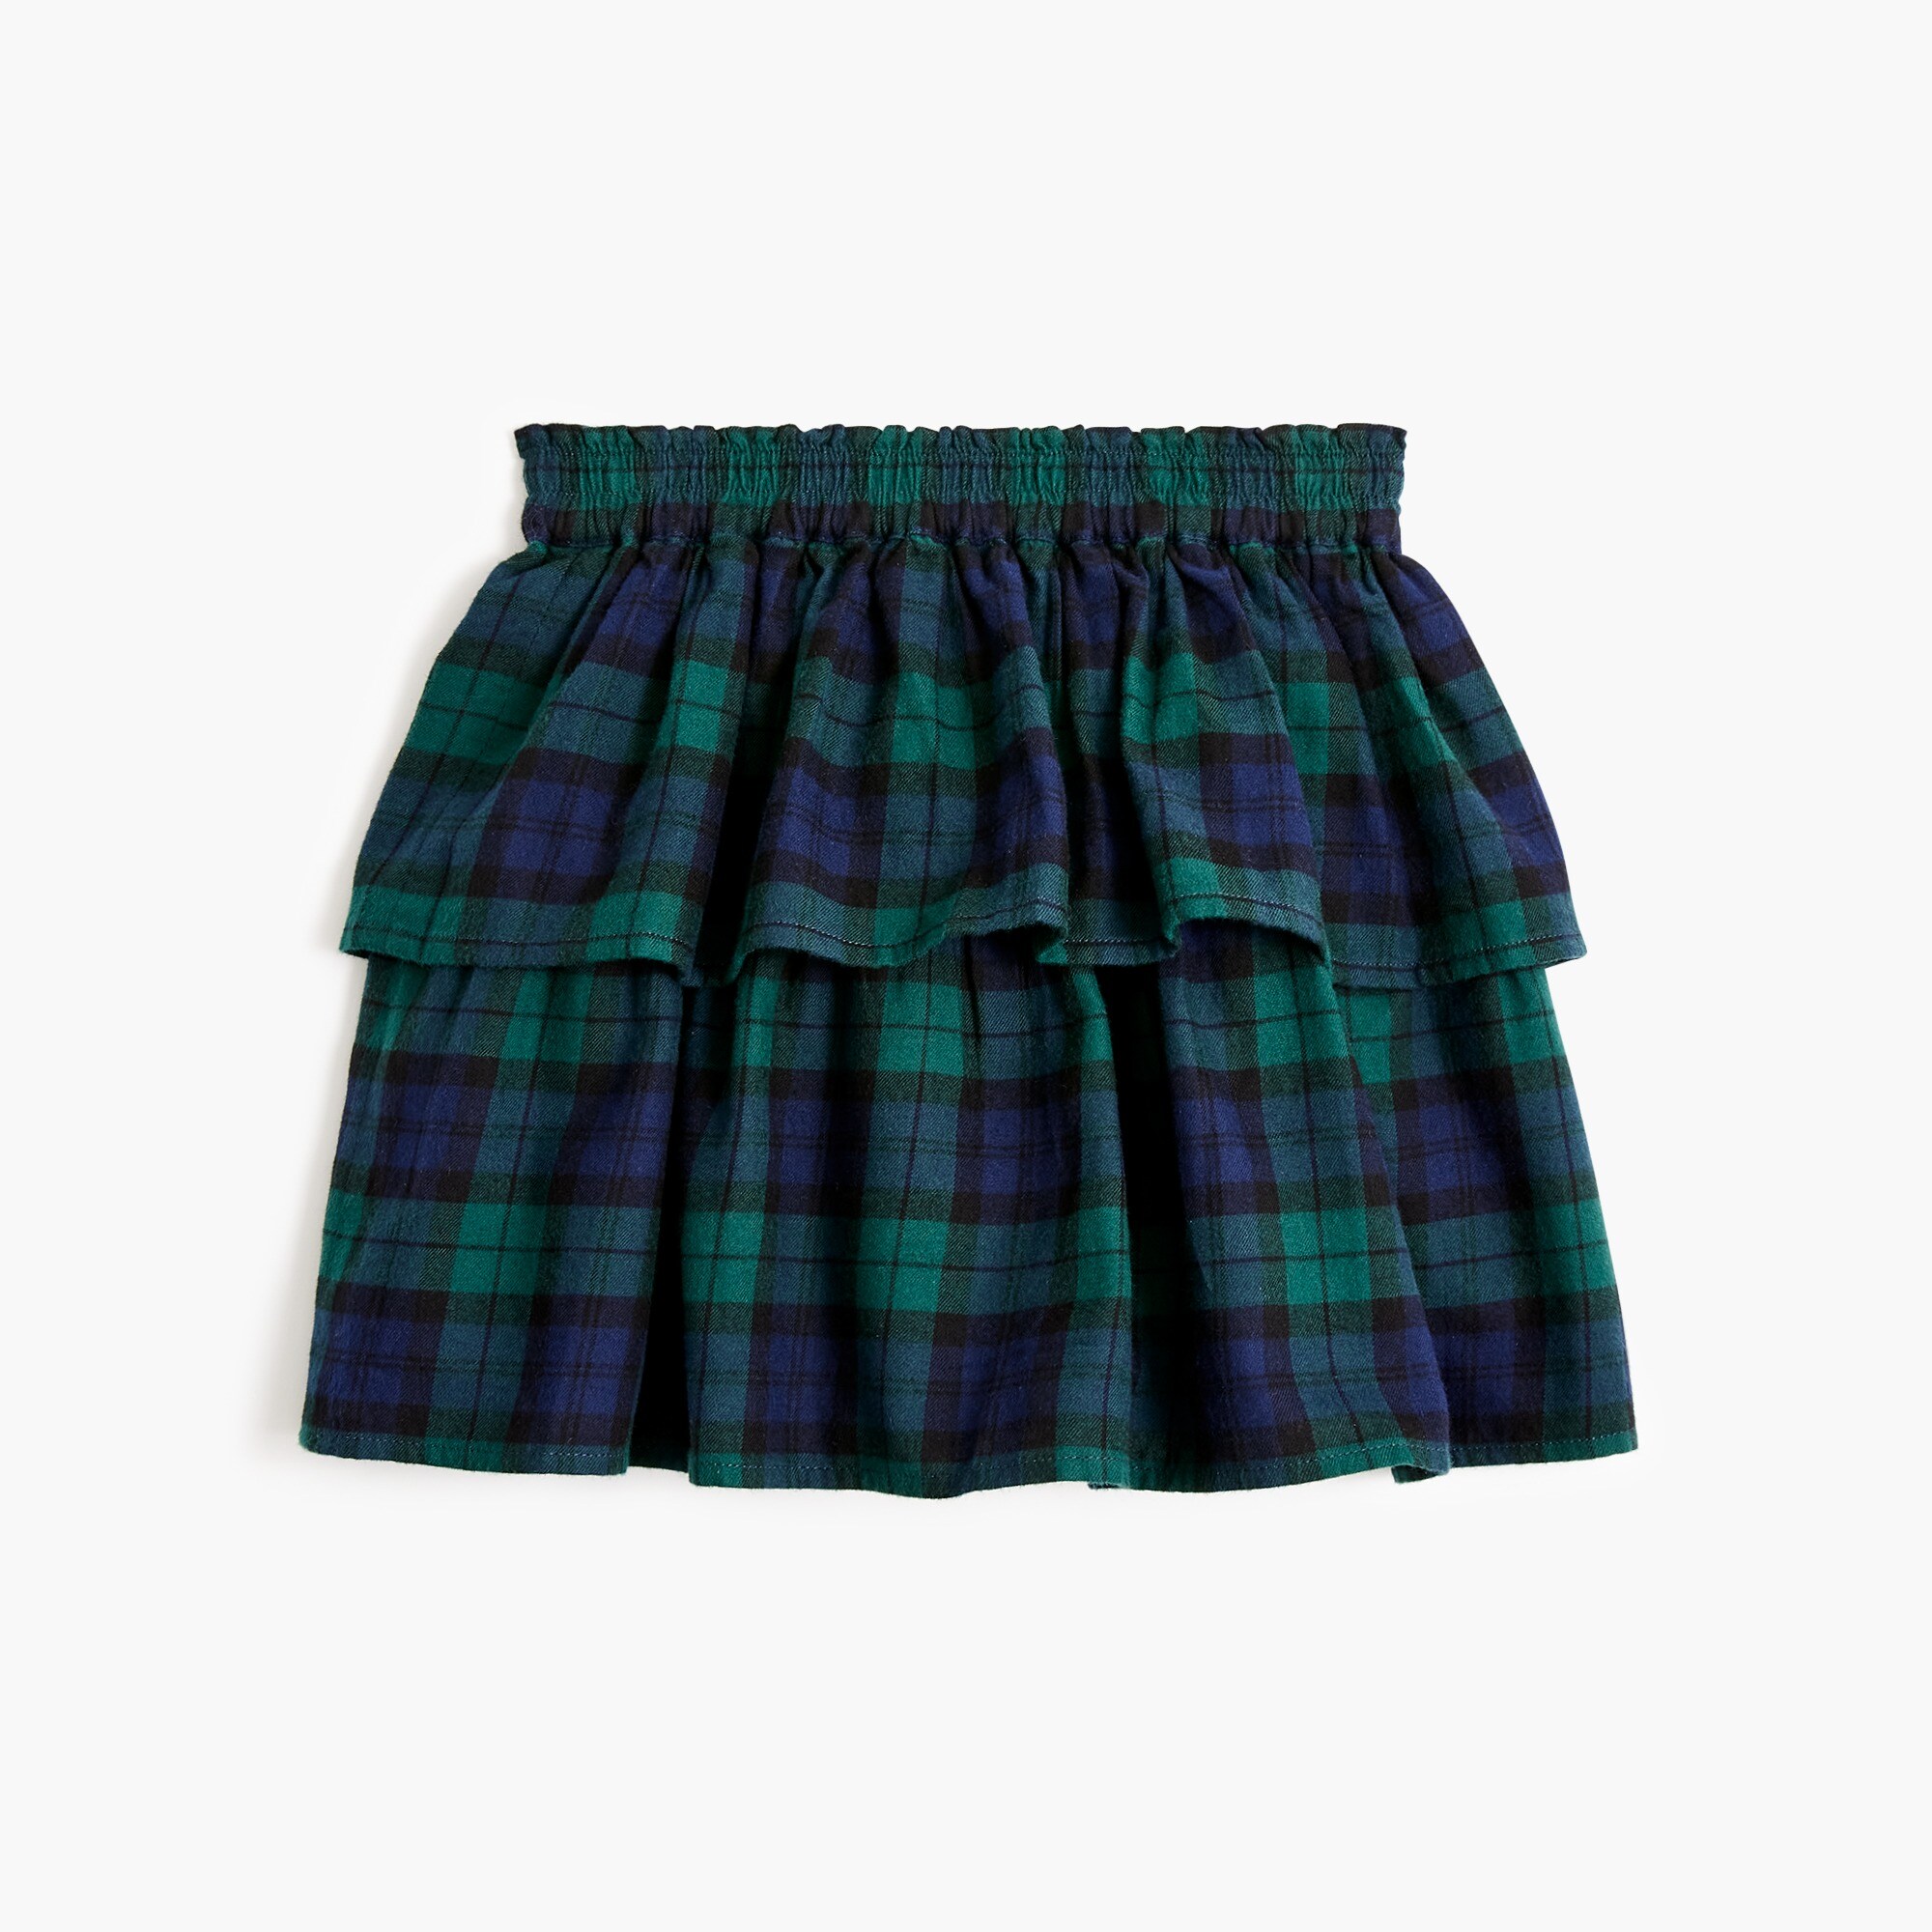  Girls' flannel skirt